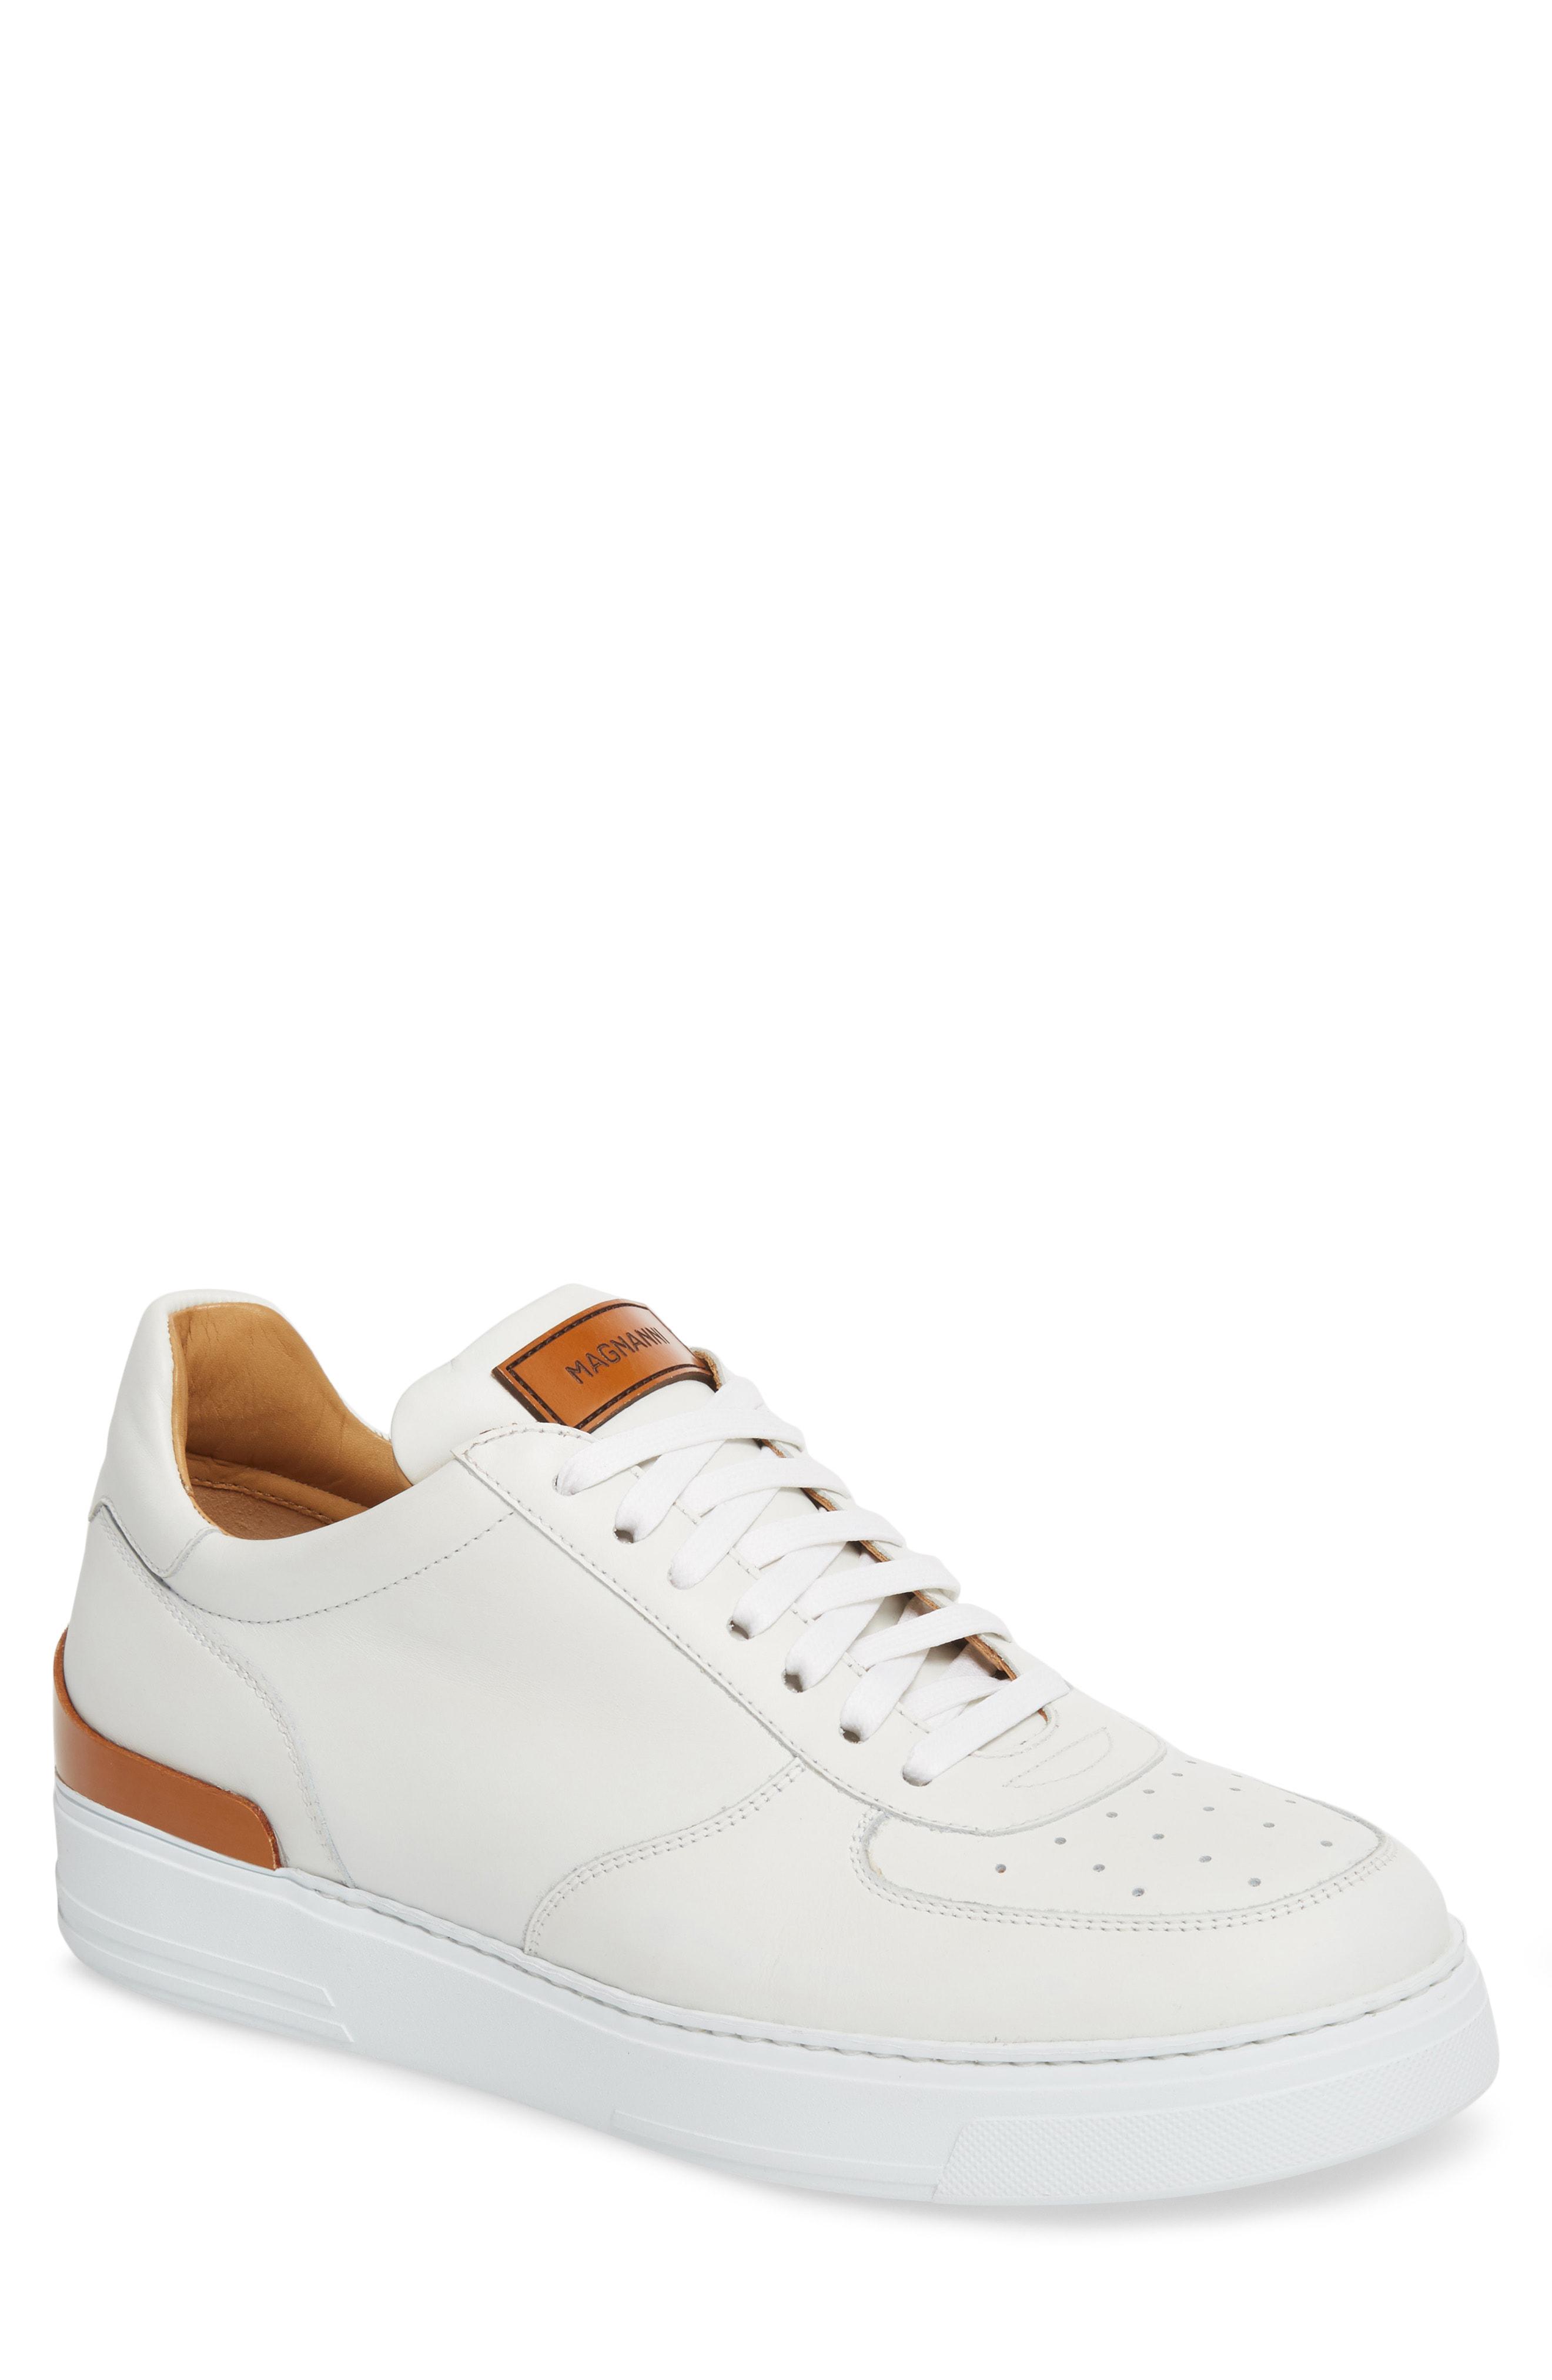 magnanni sneakers white